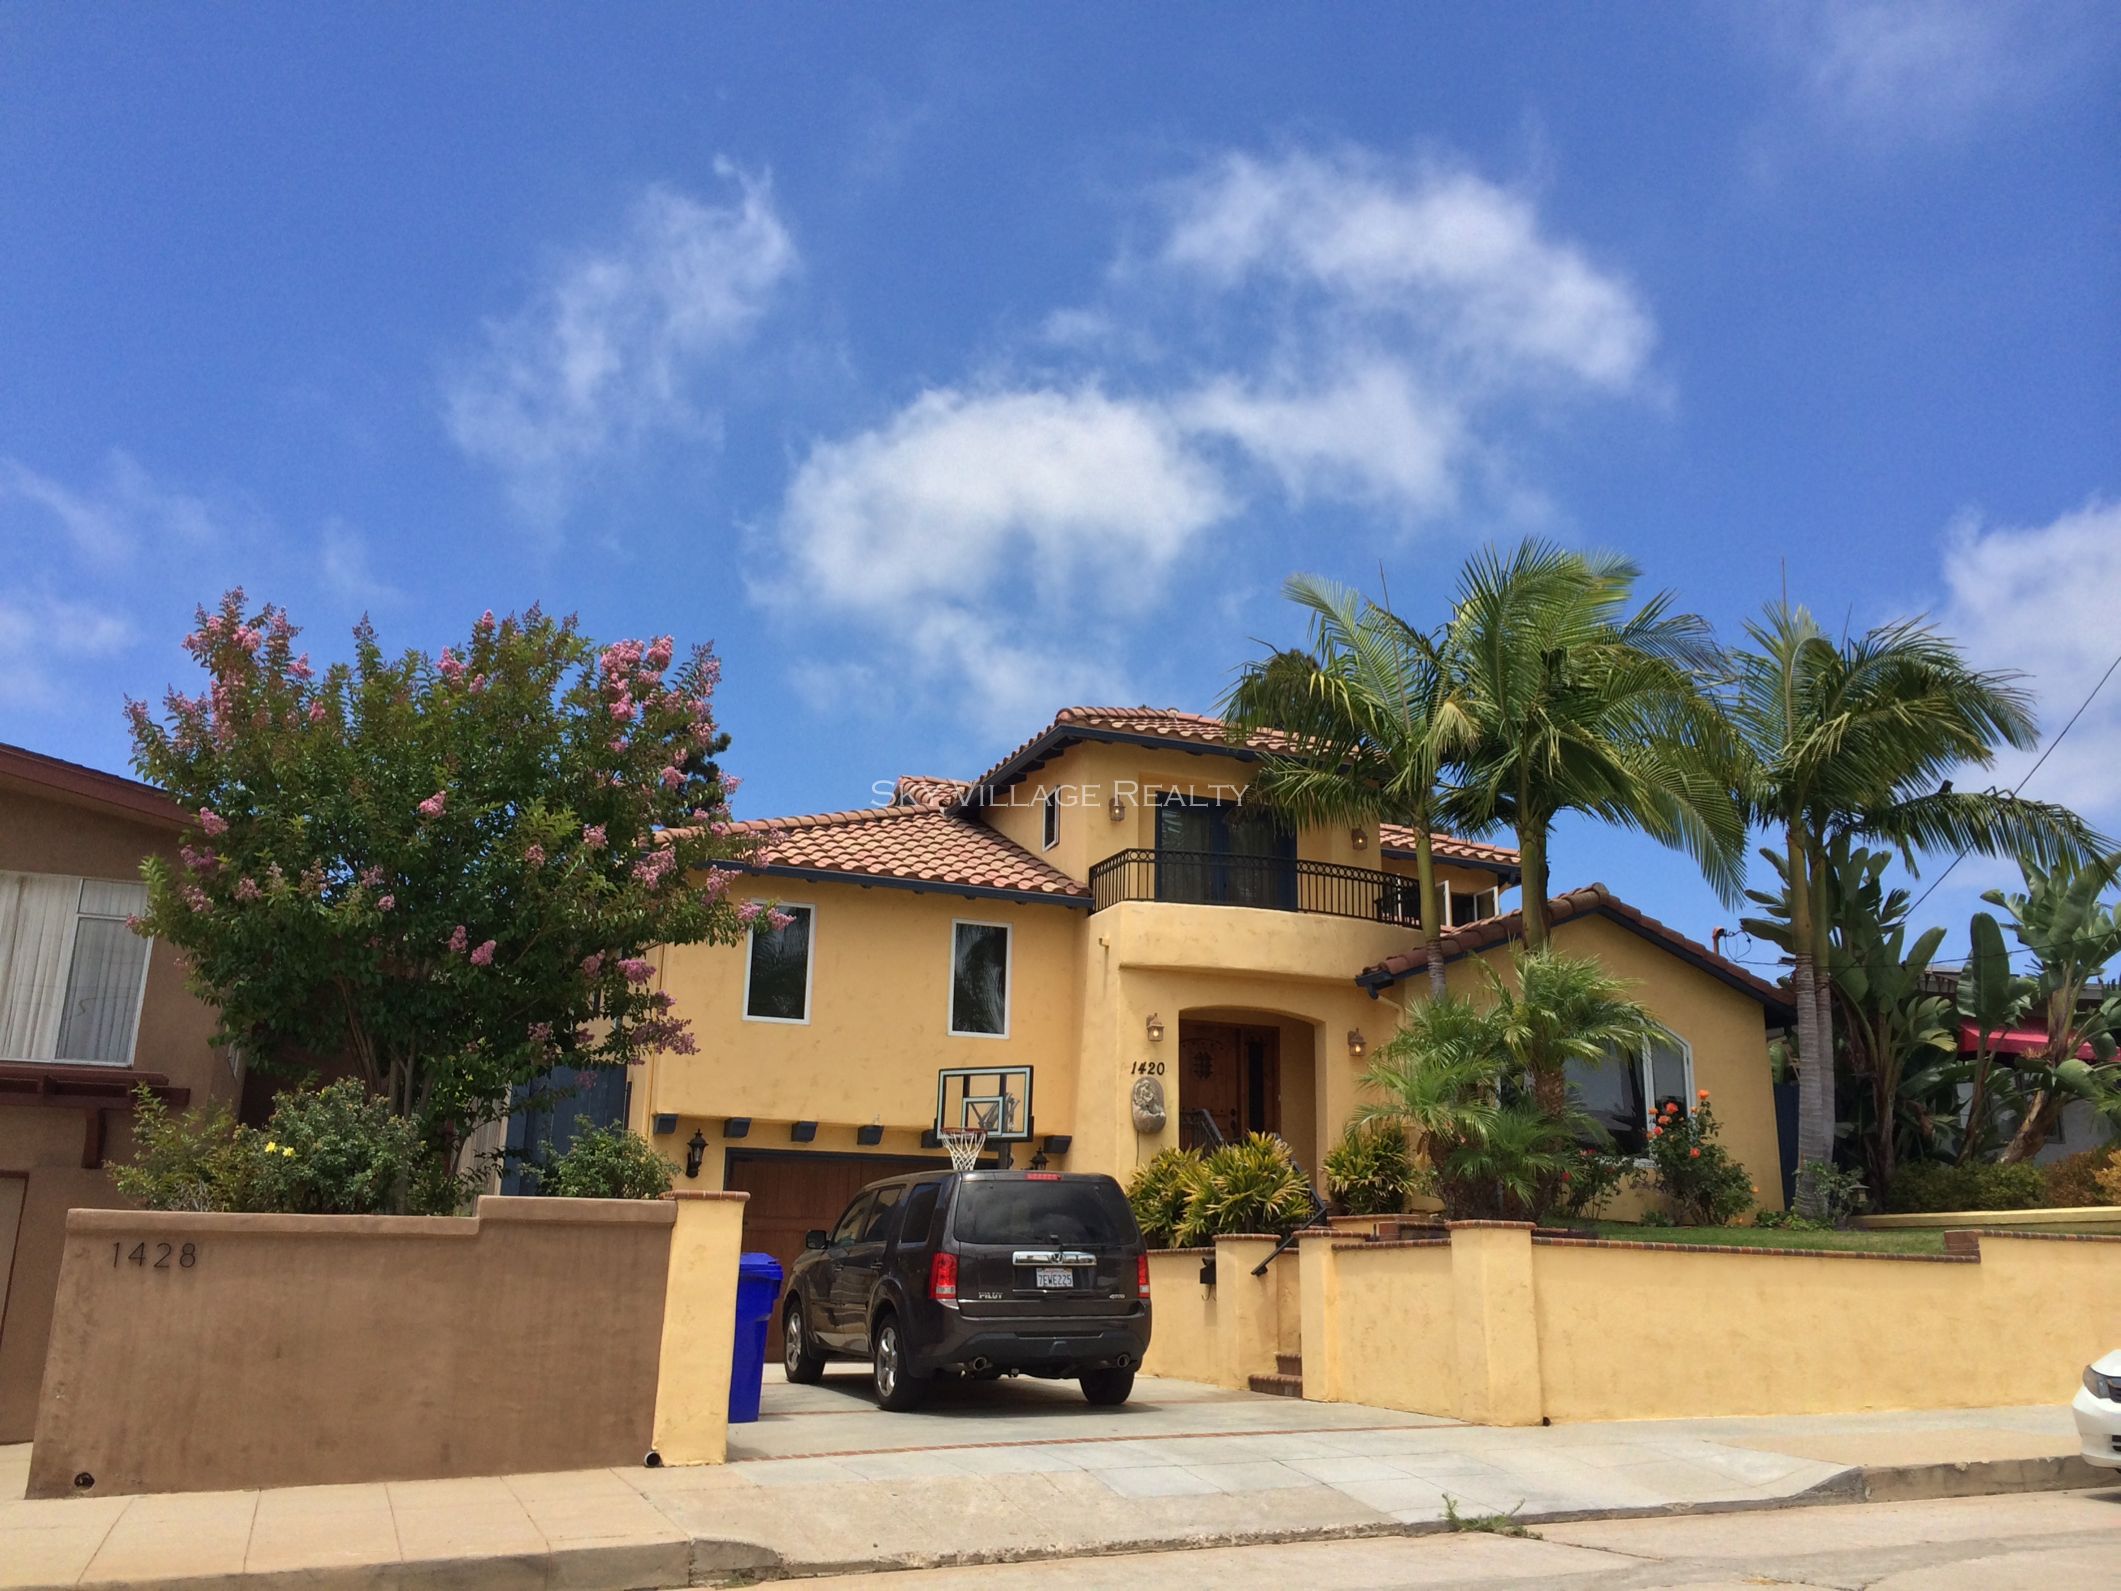 Mission Hills San Diego Home